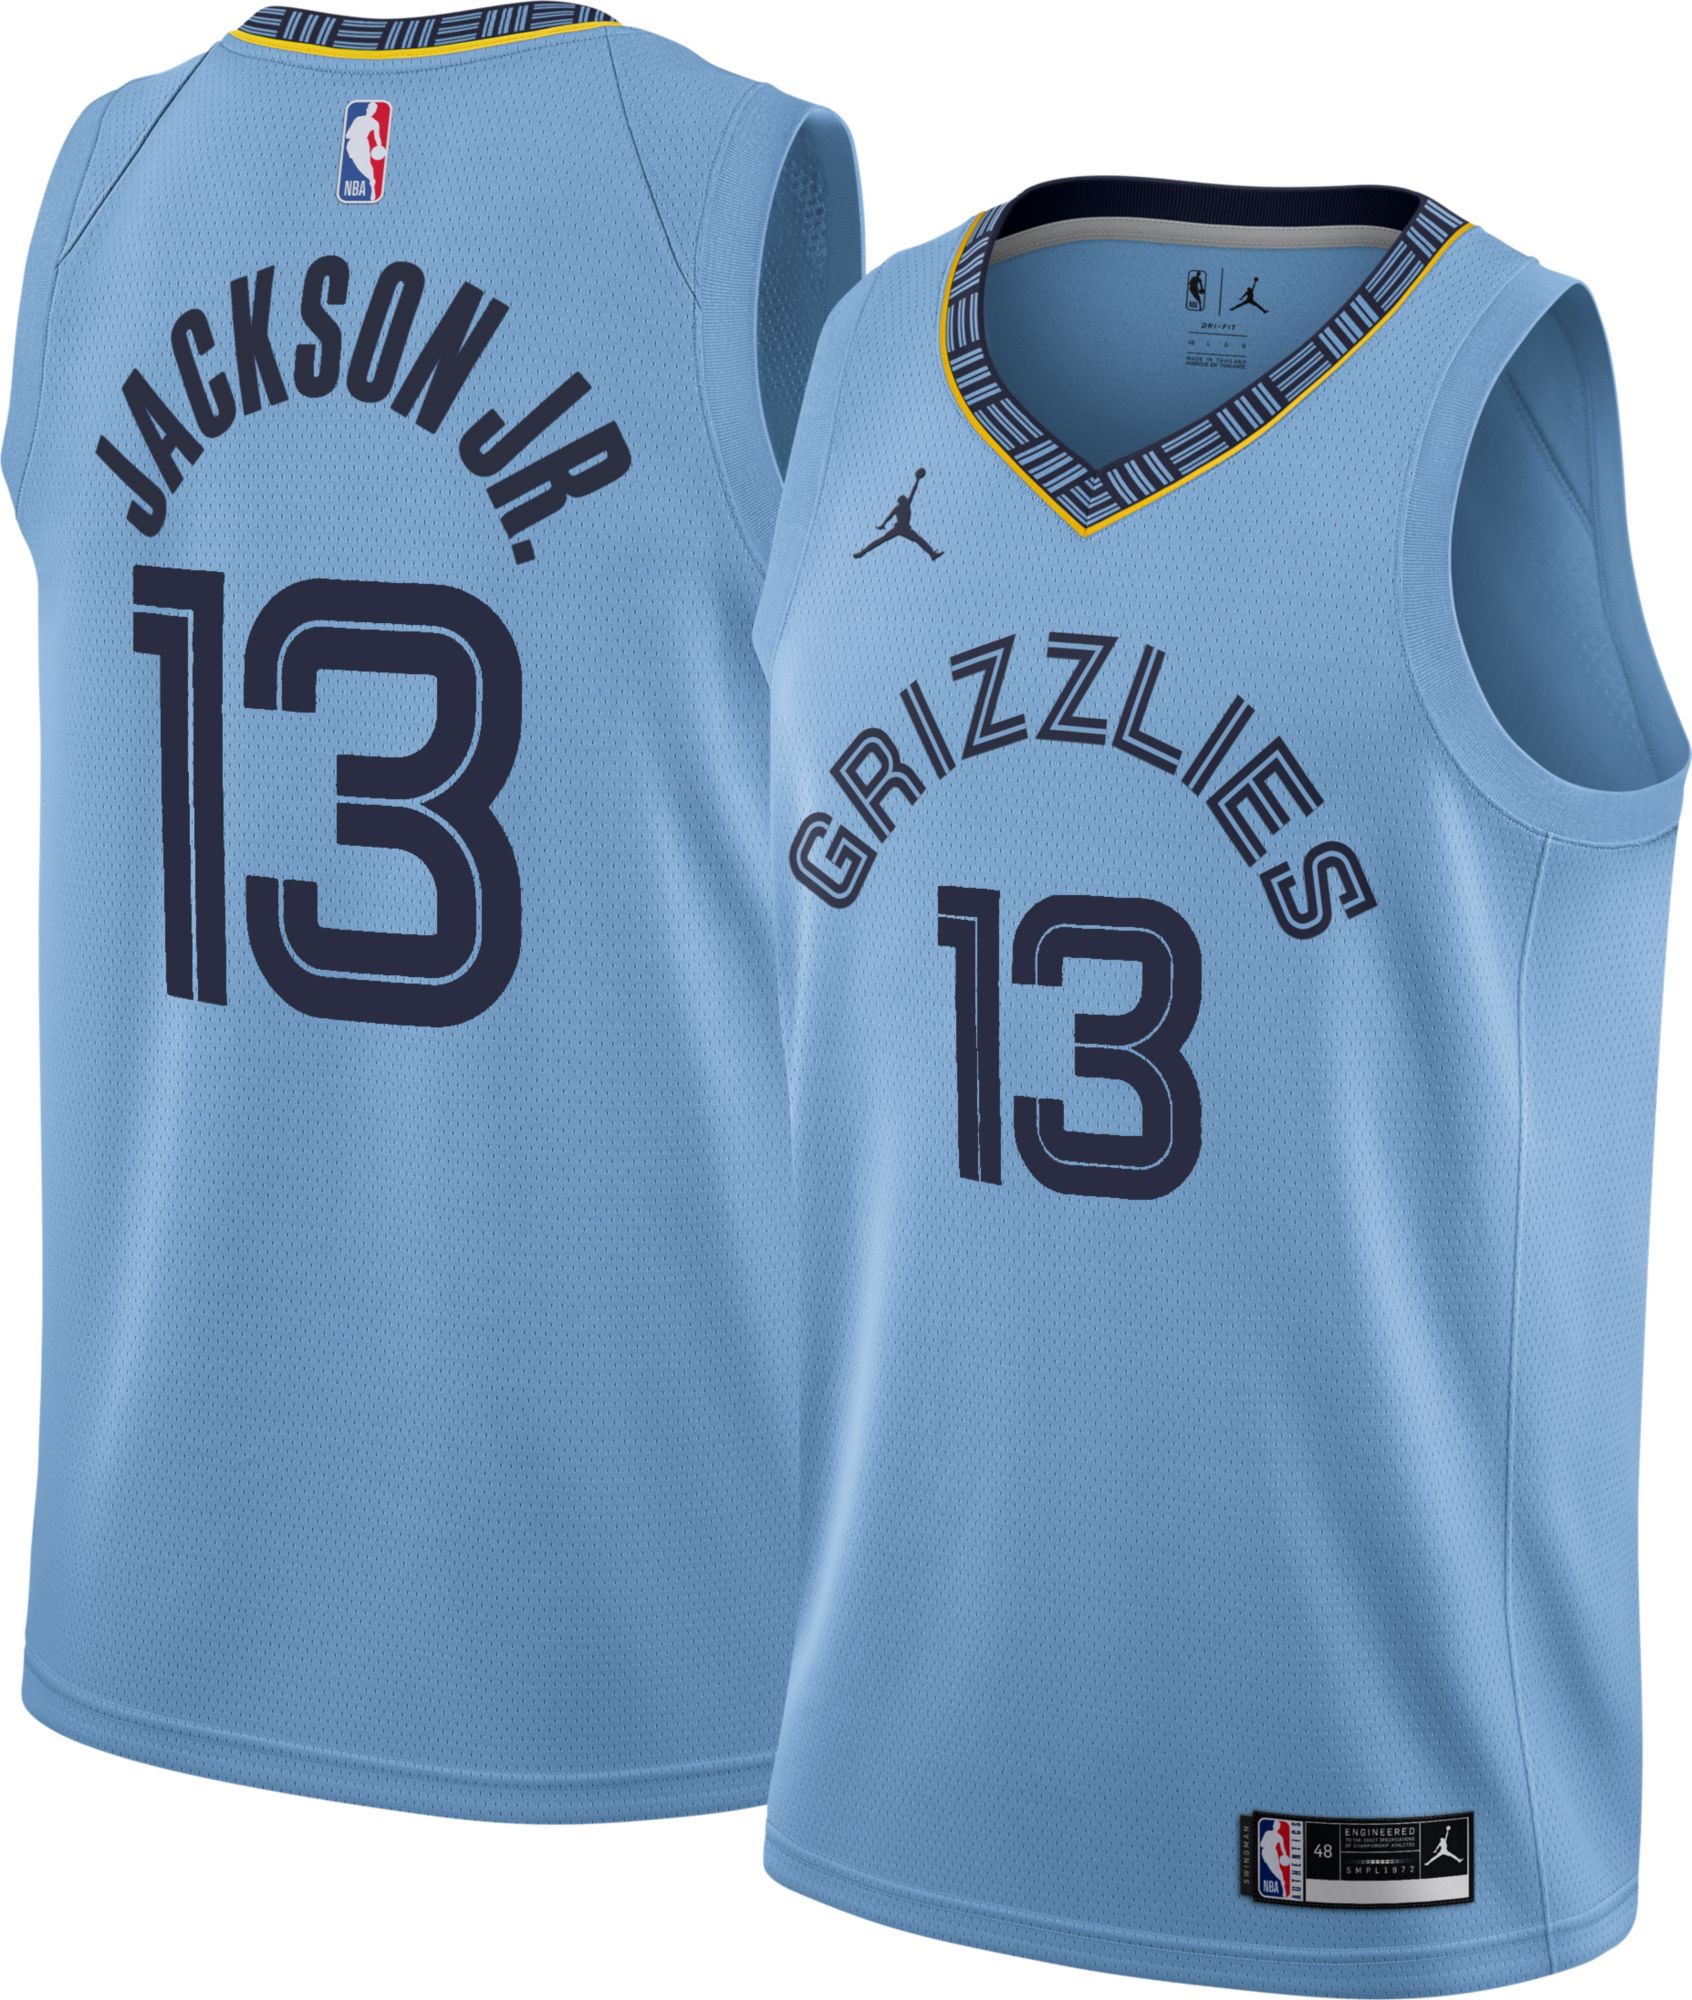 Memphis Grizzlies Nike Preschool Icon Replica Team Shorts - Navy